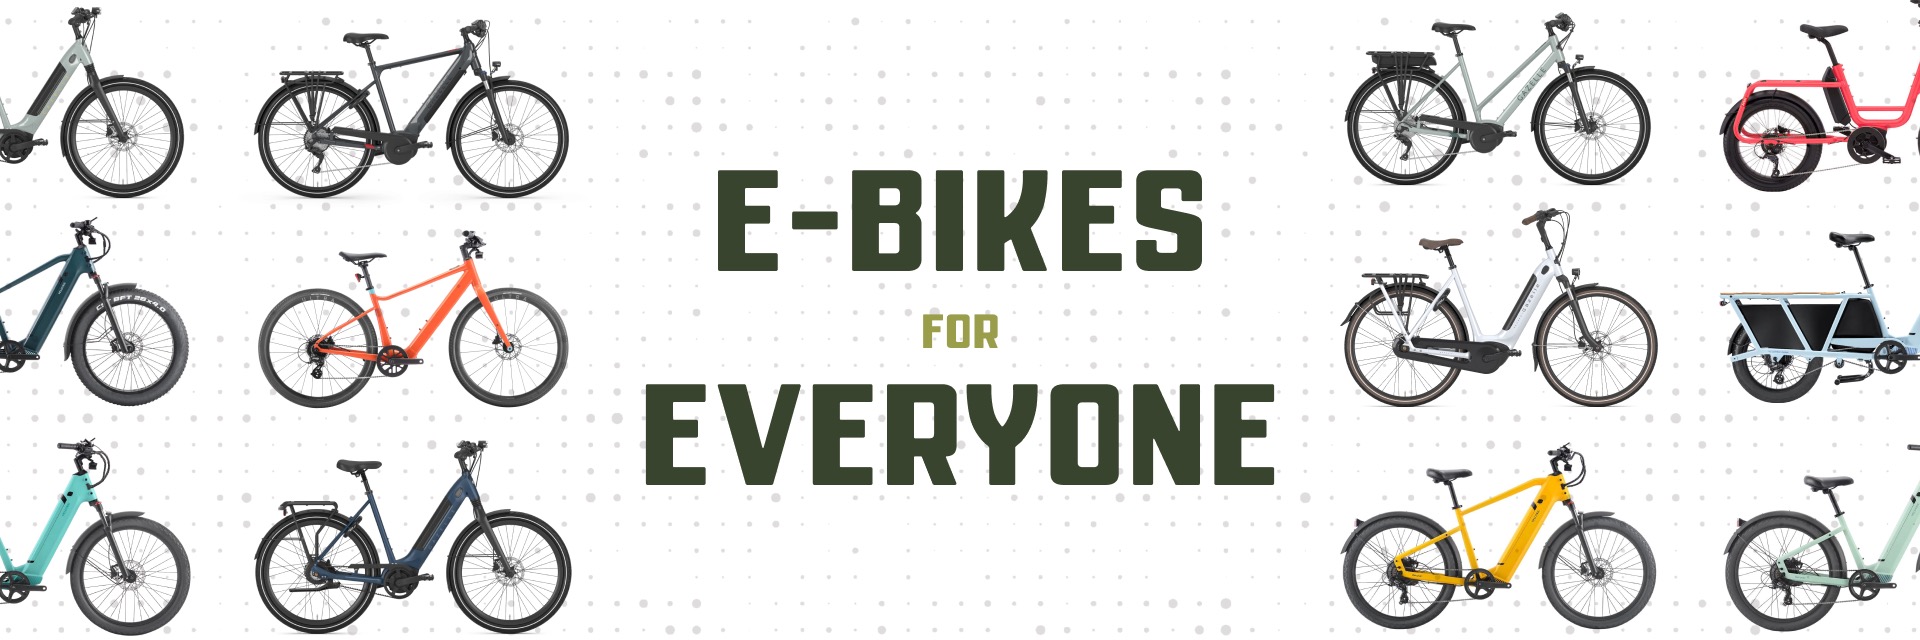 E-bikes for Everyone